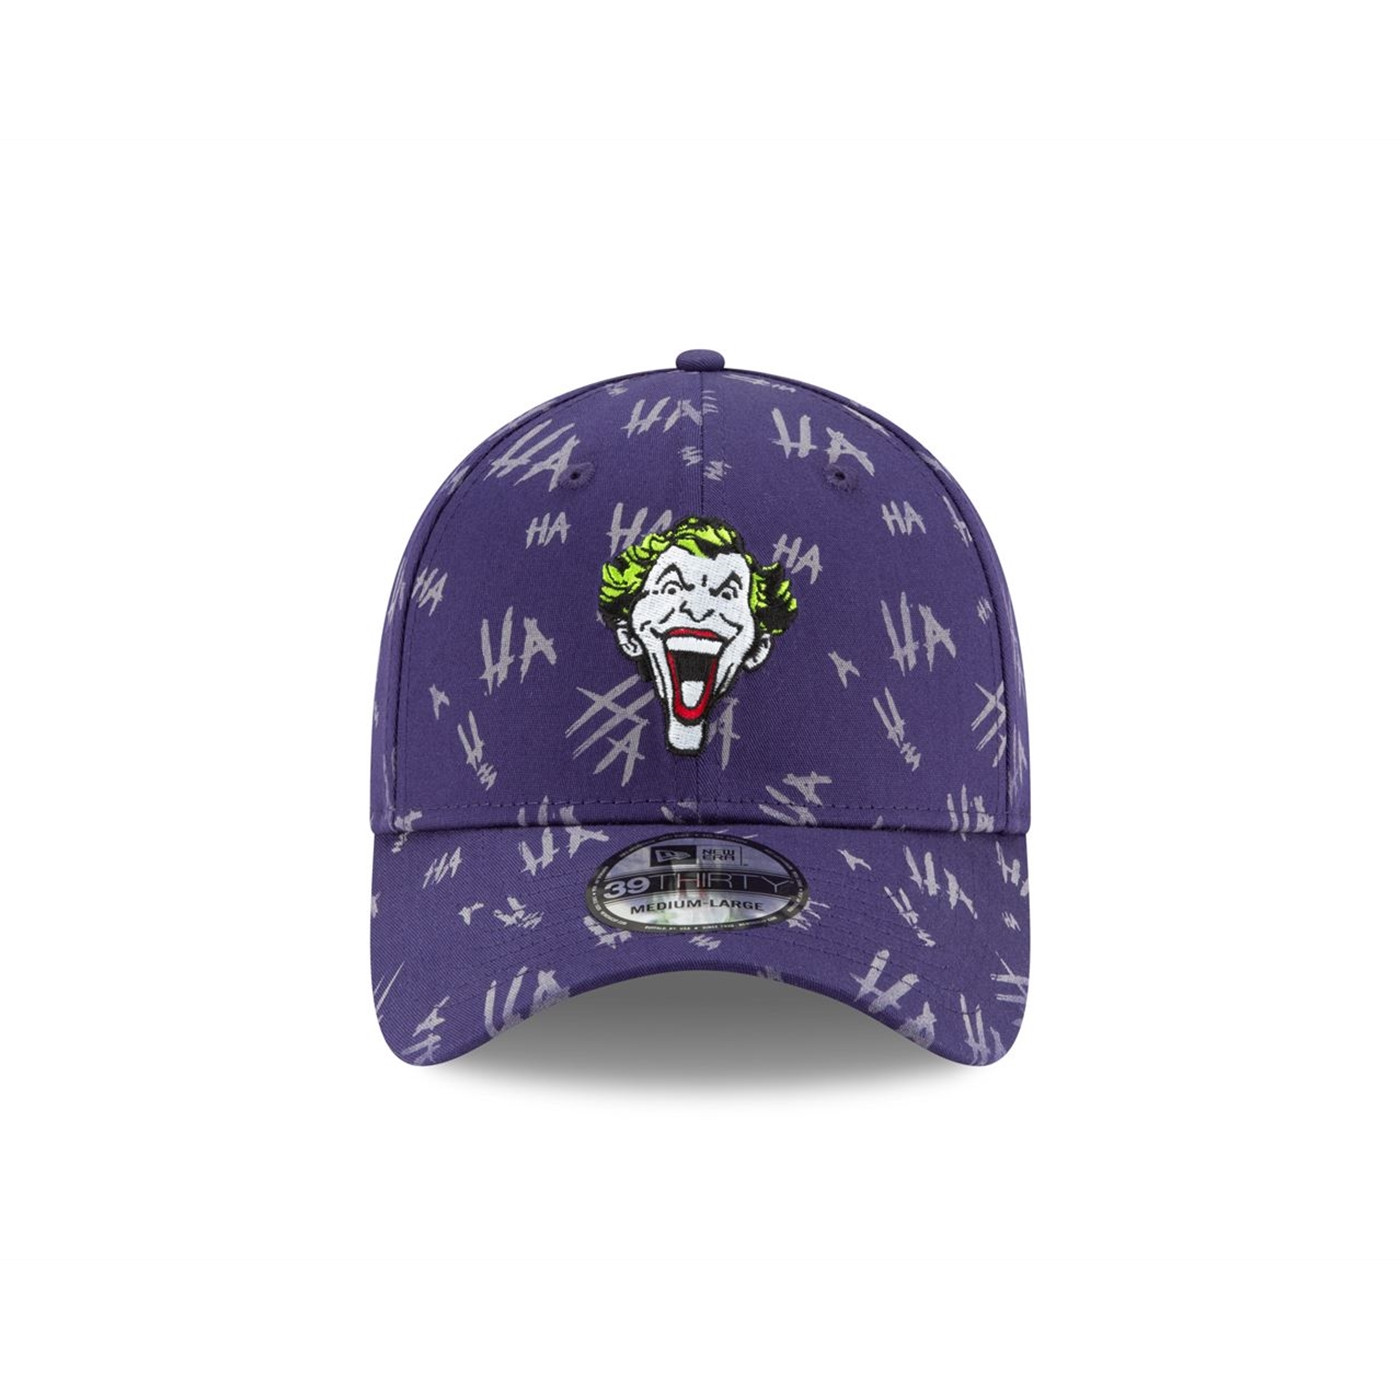 joker fitted hat